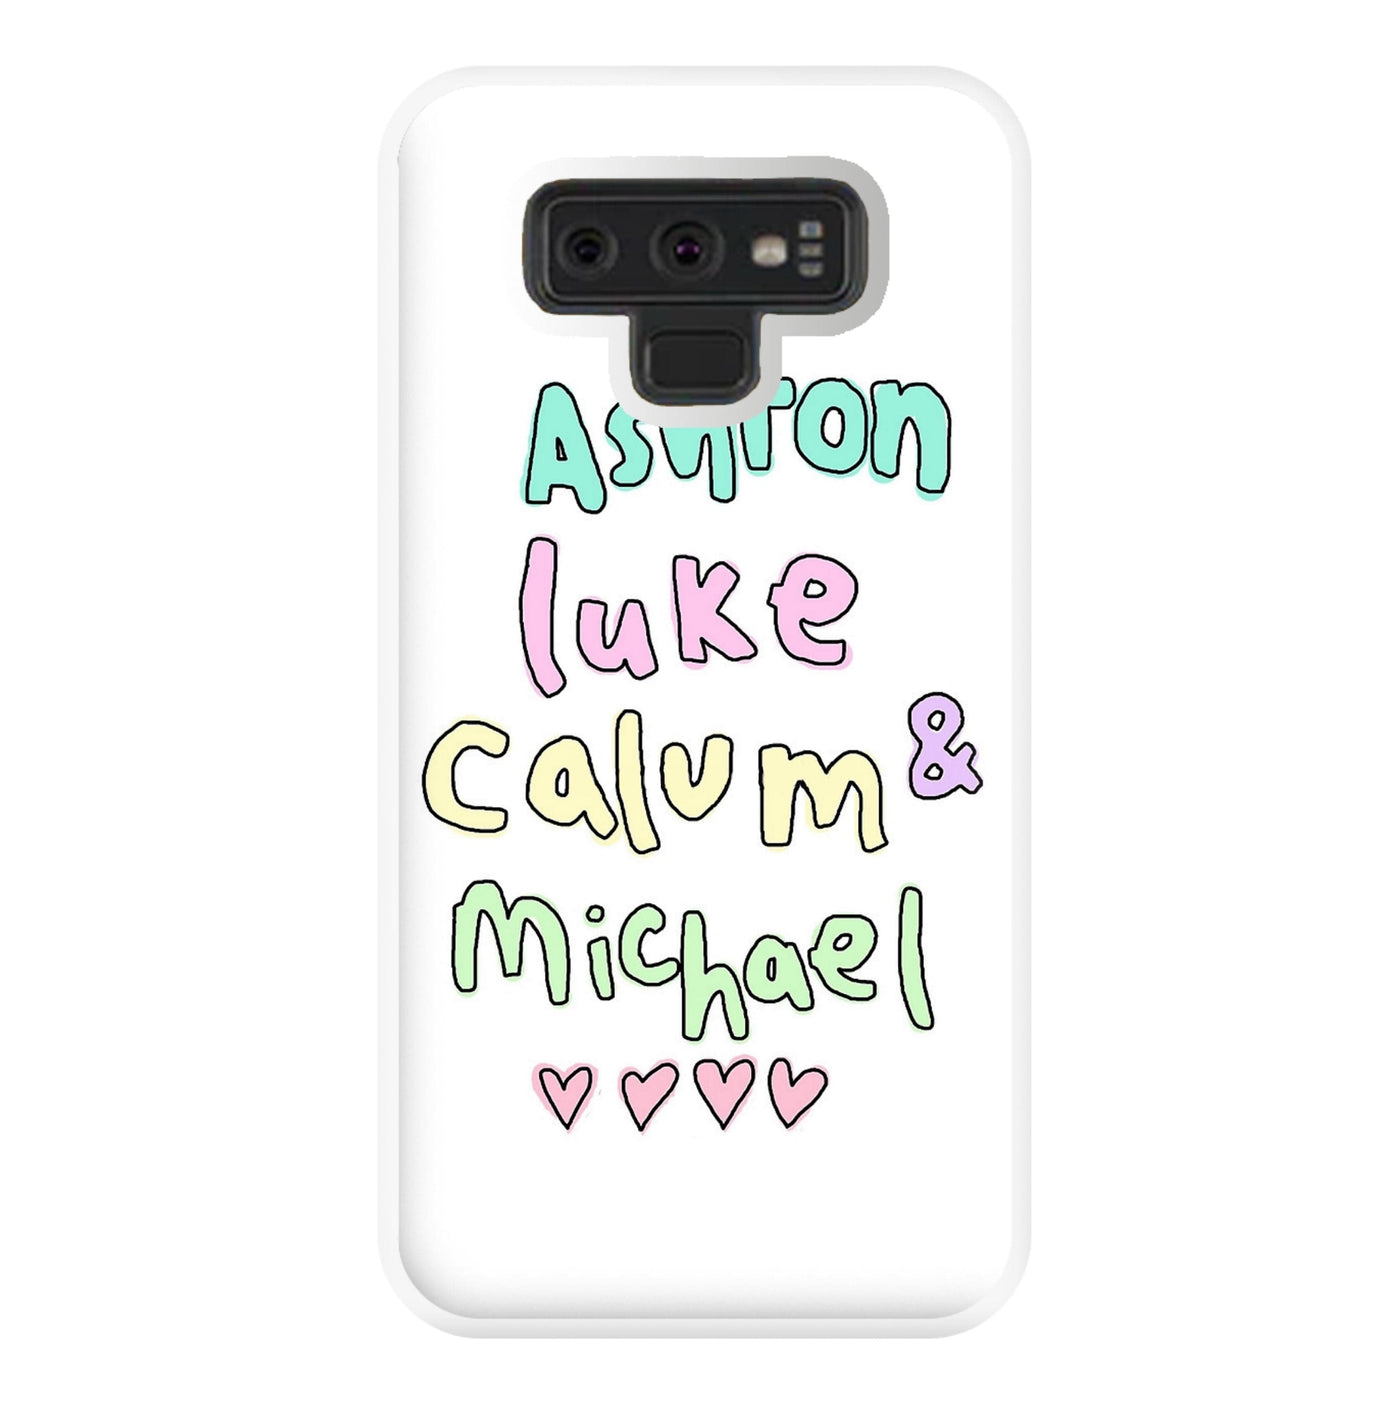 5 Seconds of Summer - Ashton, Luke, Calum & Michael Phone Case